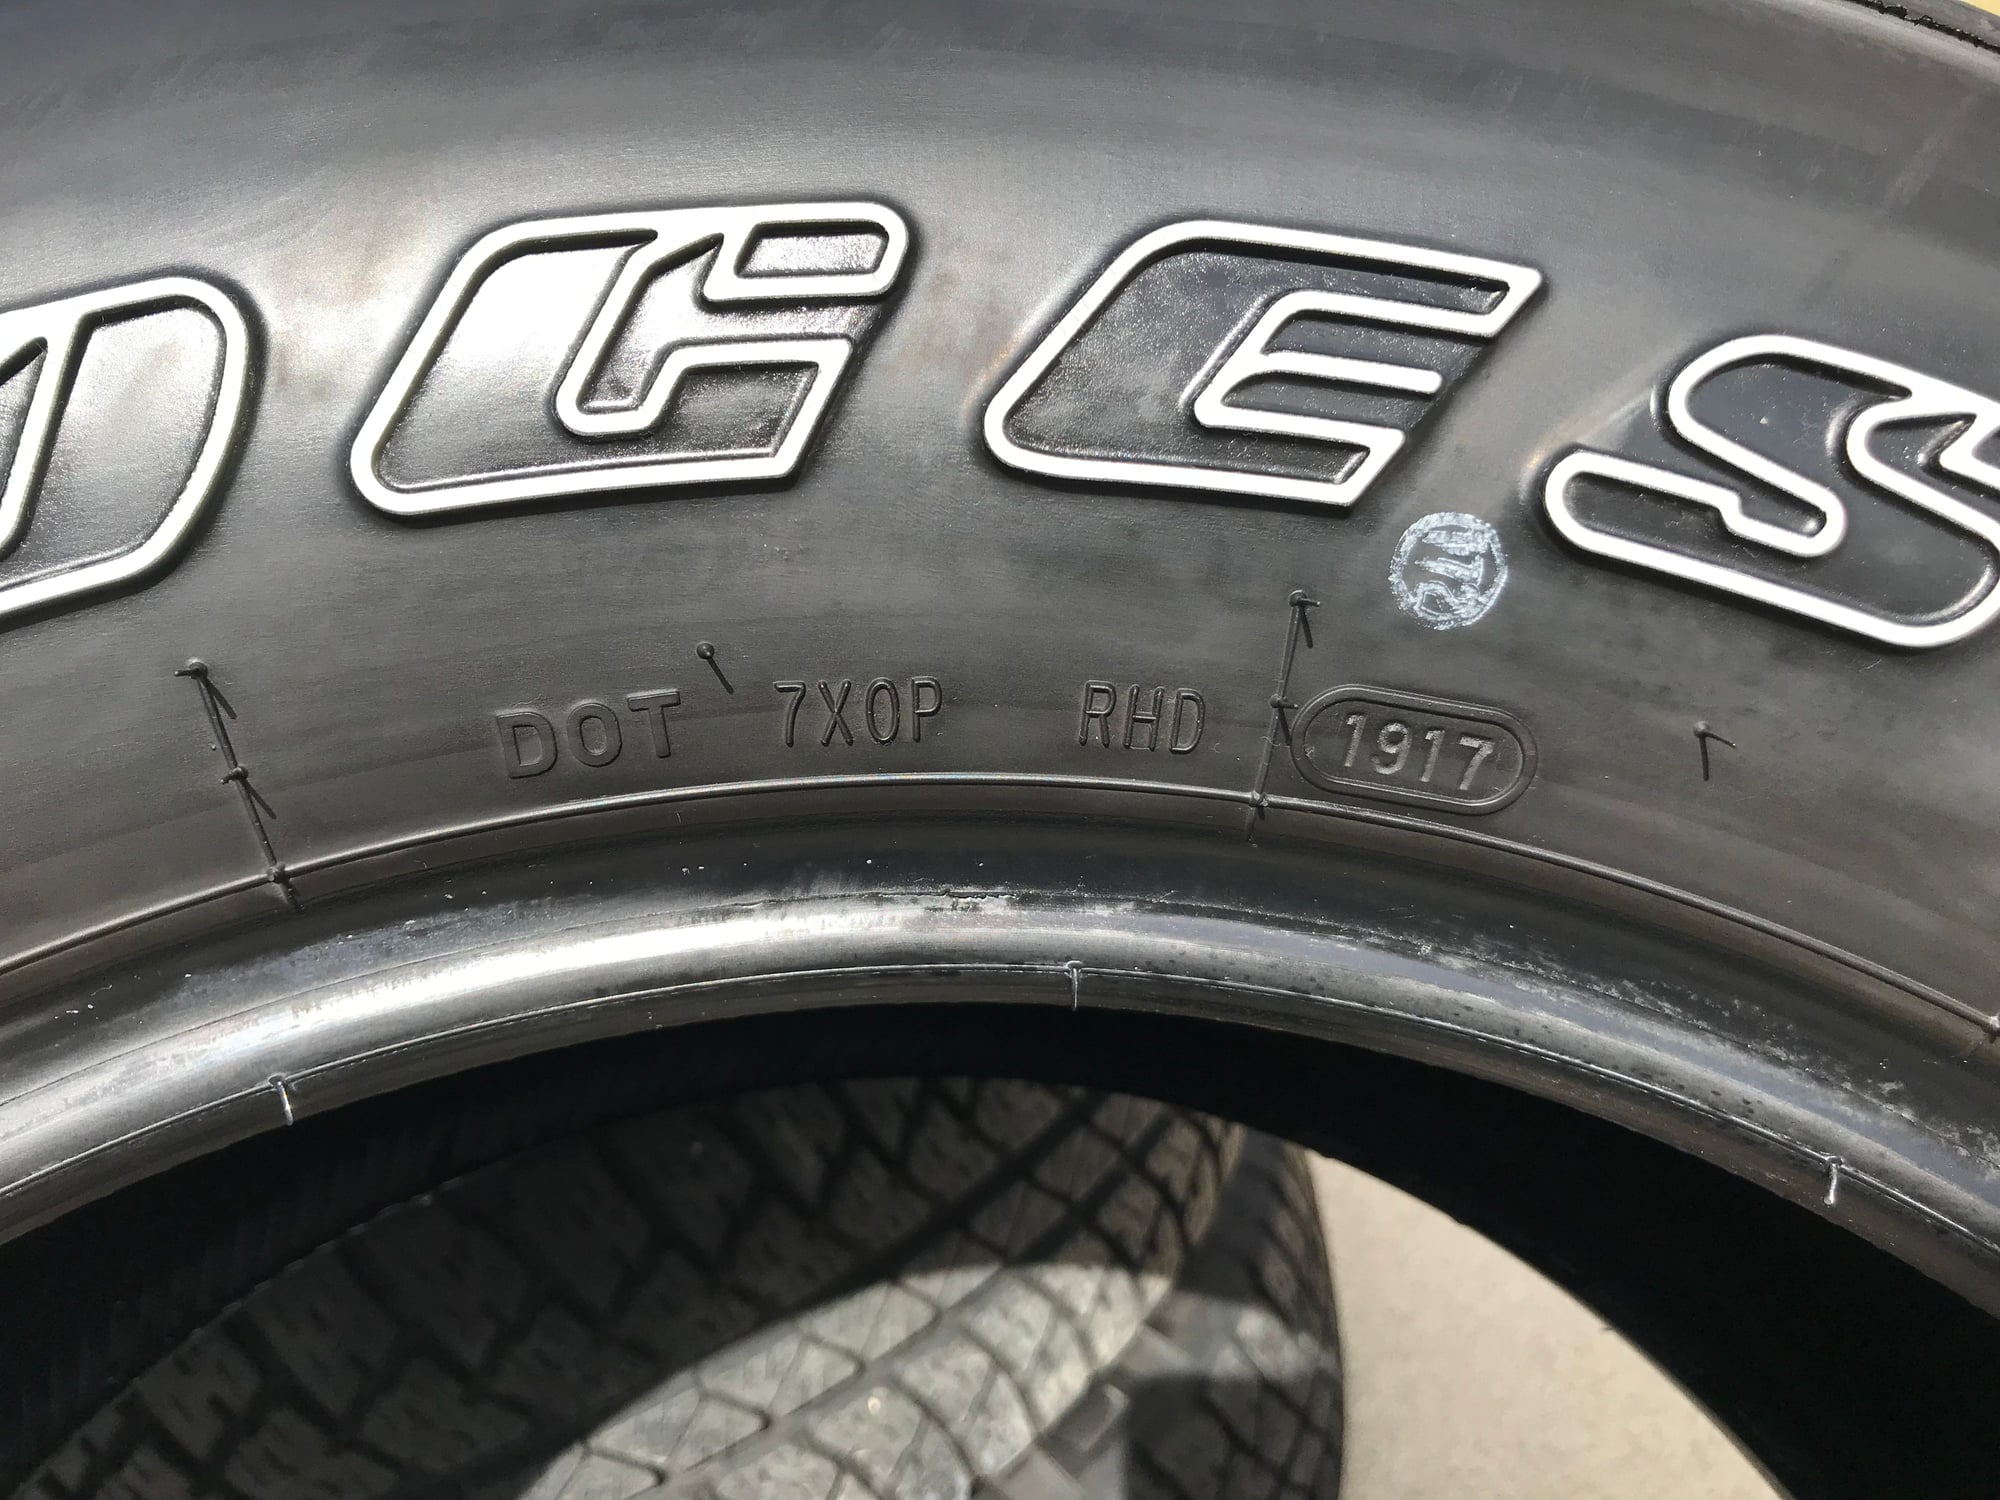 Wheels and Tires/Axles - Bridgestone Dueler A/T RH-S 255/70r18 Qty: 5 - Used - Cincinnati, OH 45150, United States